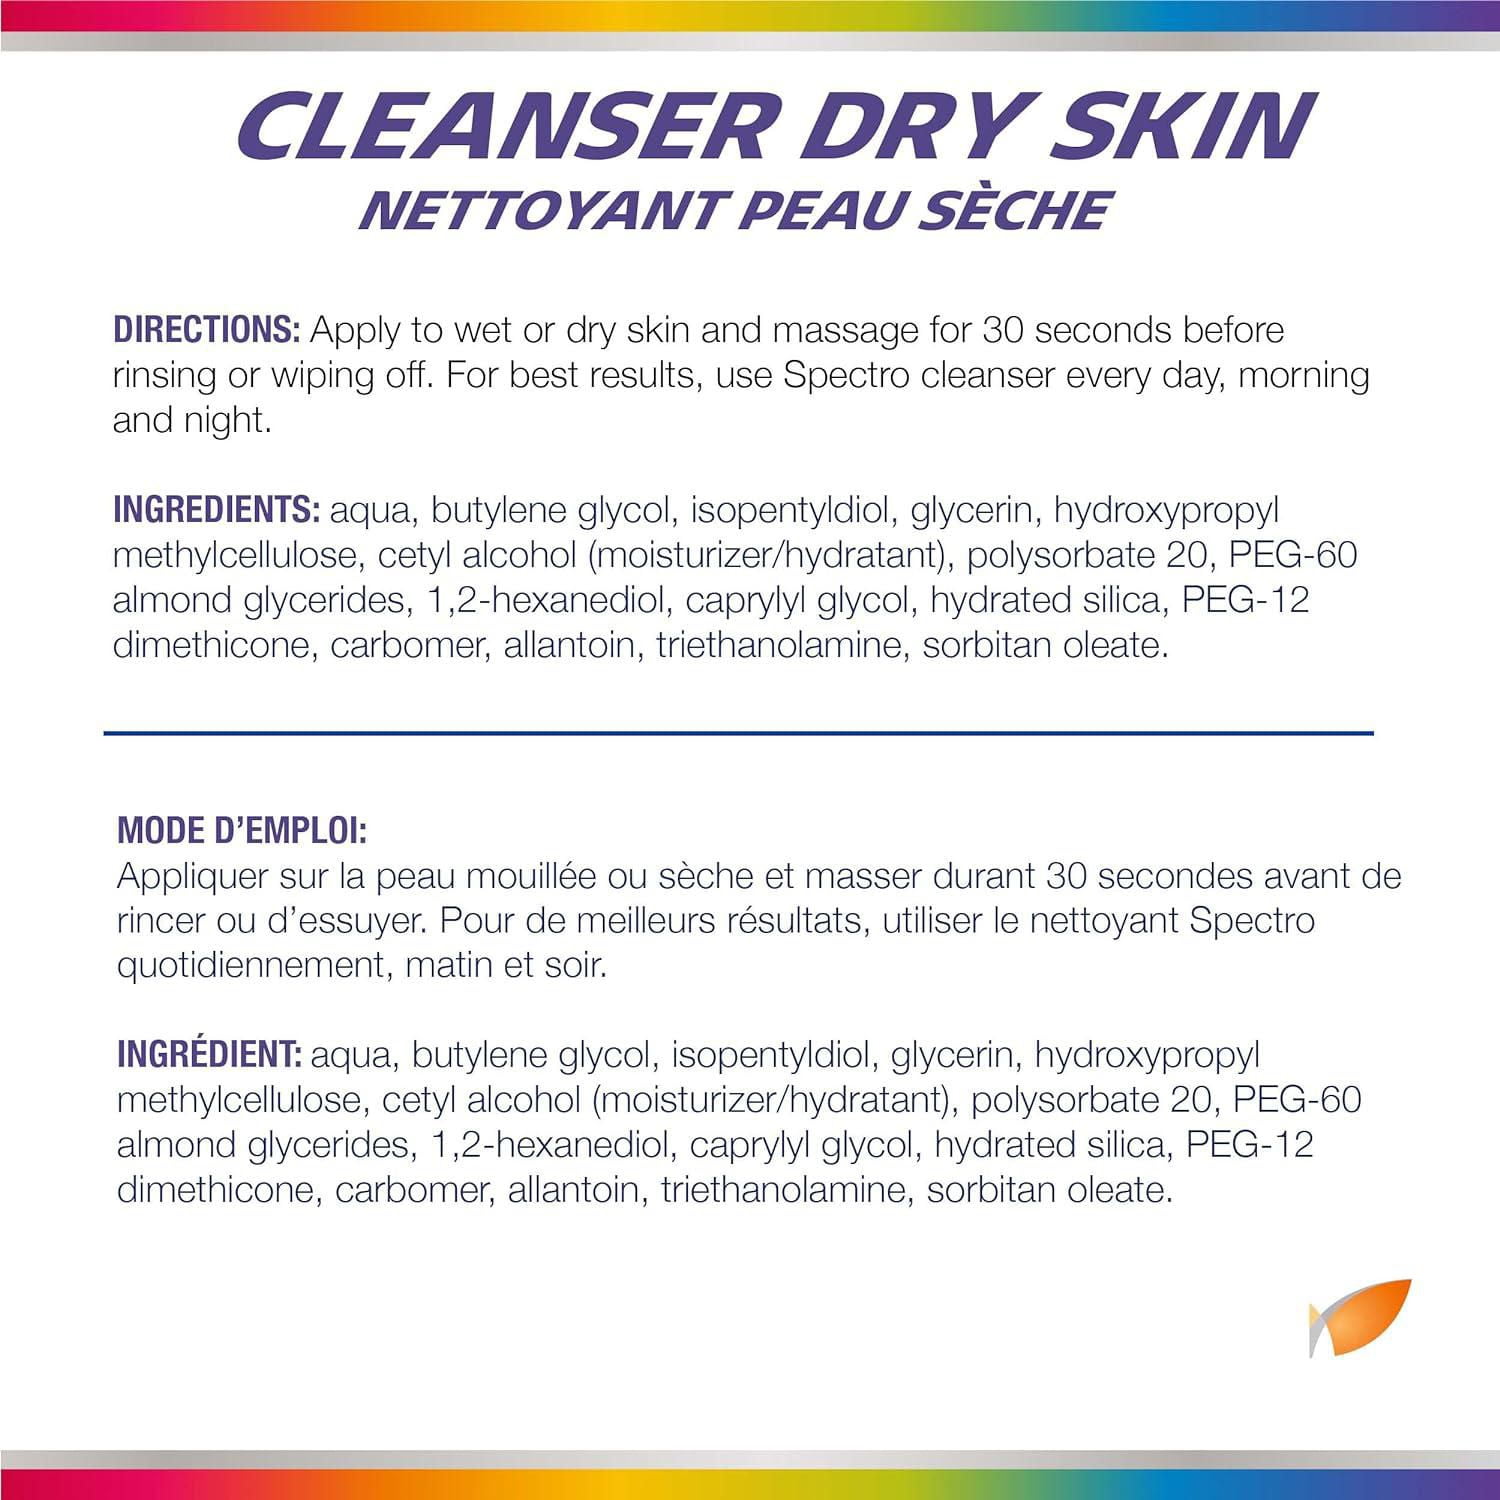 Spectro Cleanser dry skin reviews in Face Wash - ChickAdvisor